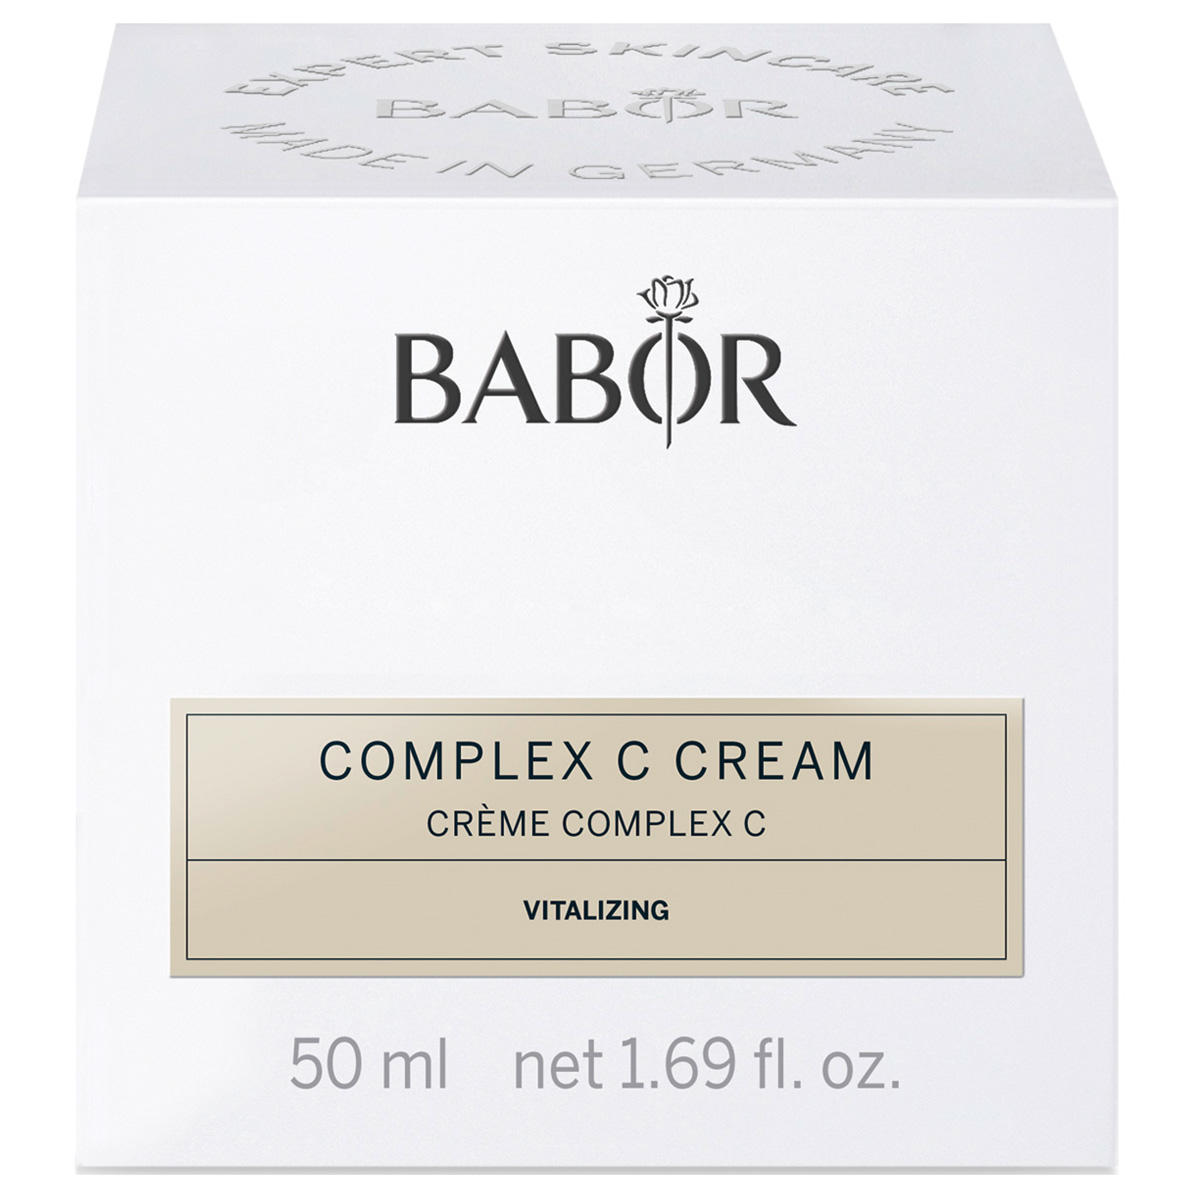 BABOR SKINOVAGE Complex C Cream Vitalizing 50 ml - 2